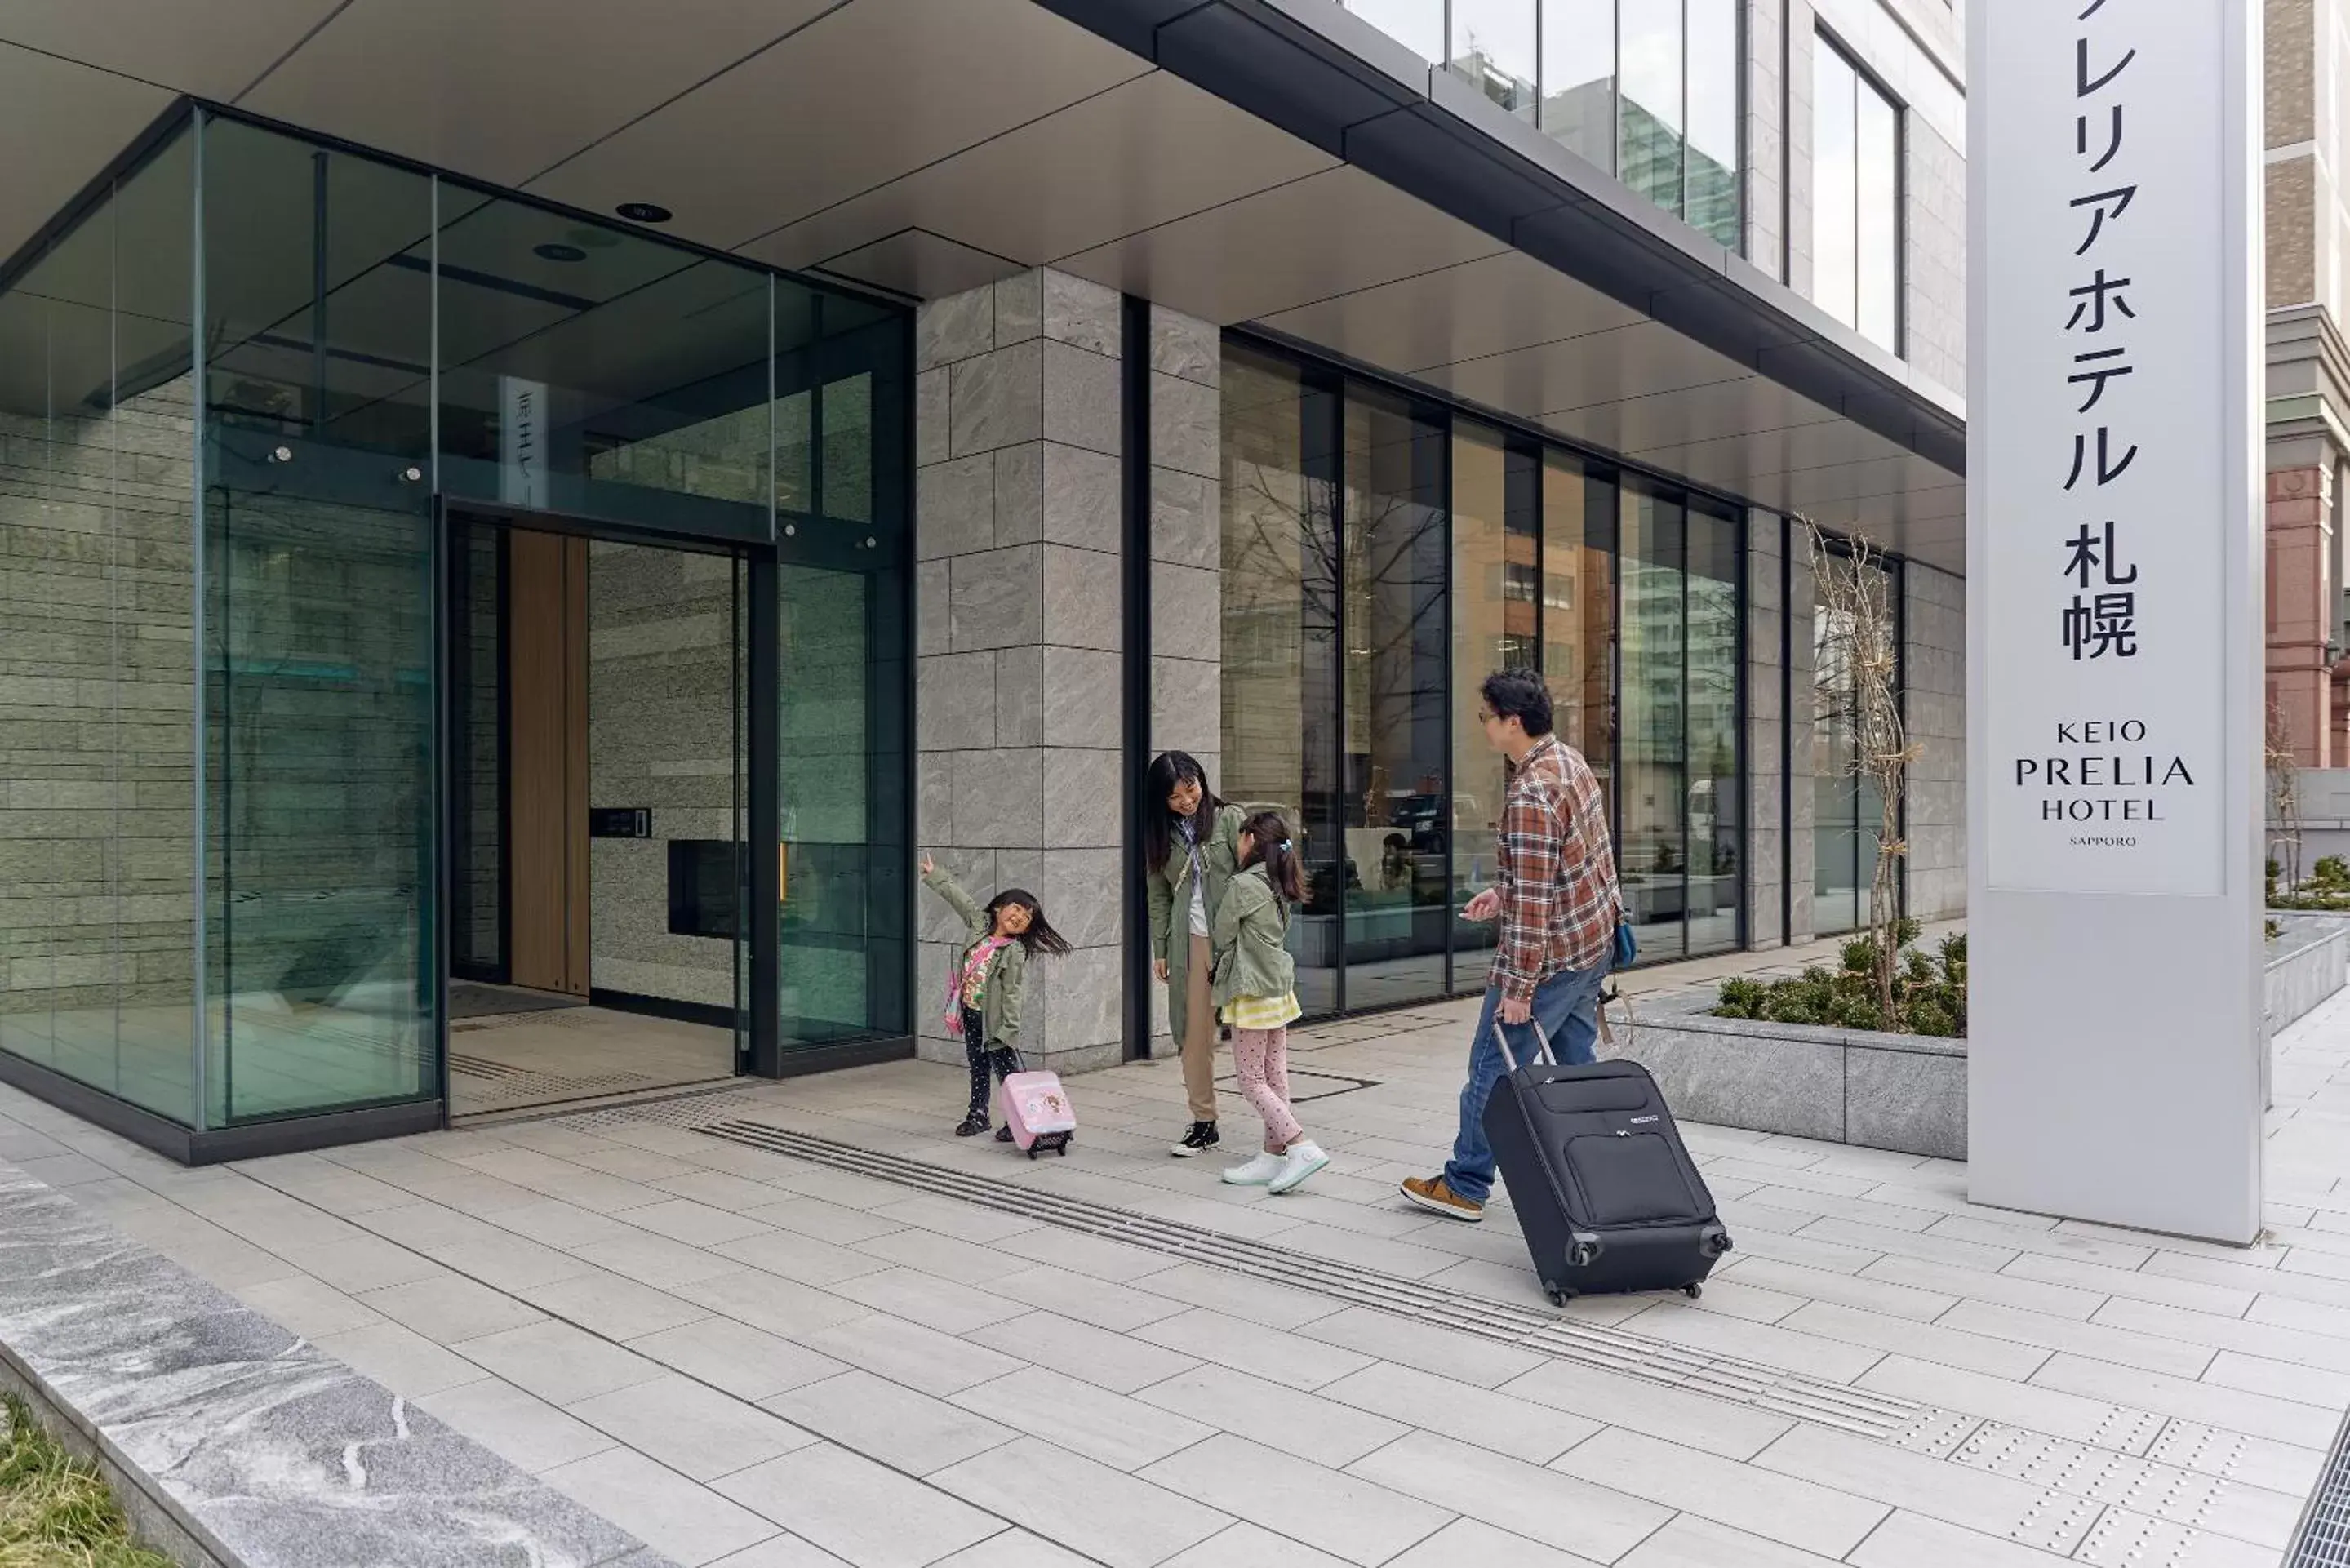 Facade/entrance in Keio Prelia Hotel Sapporo